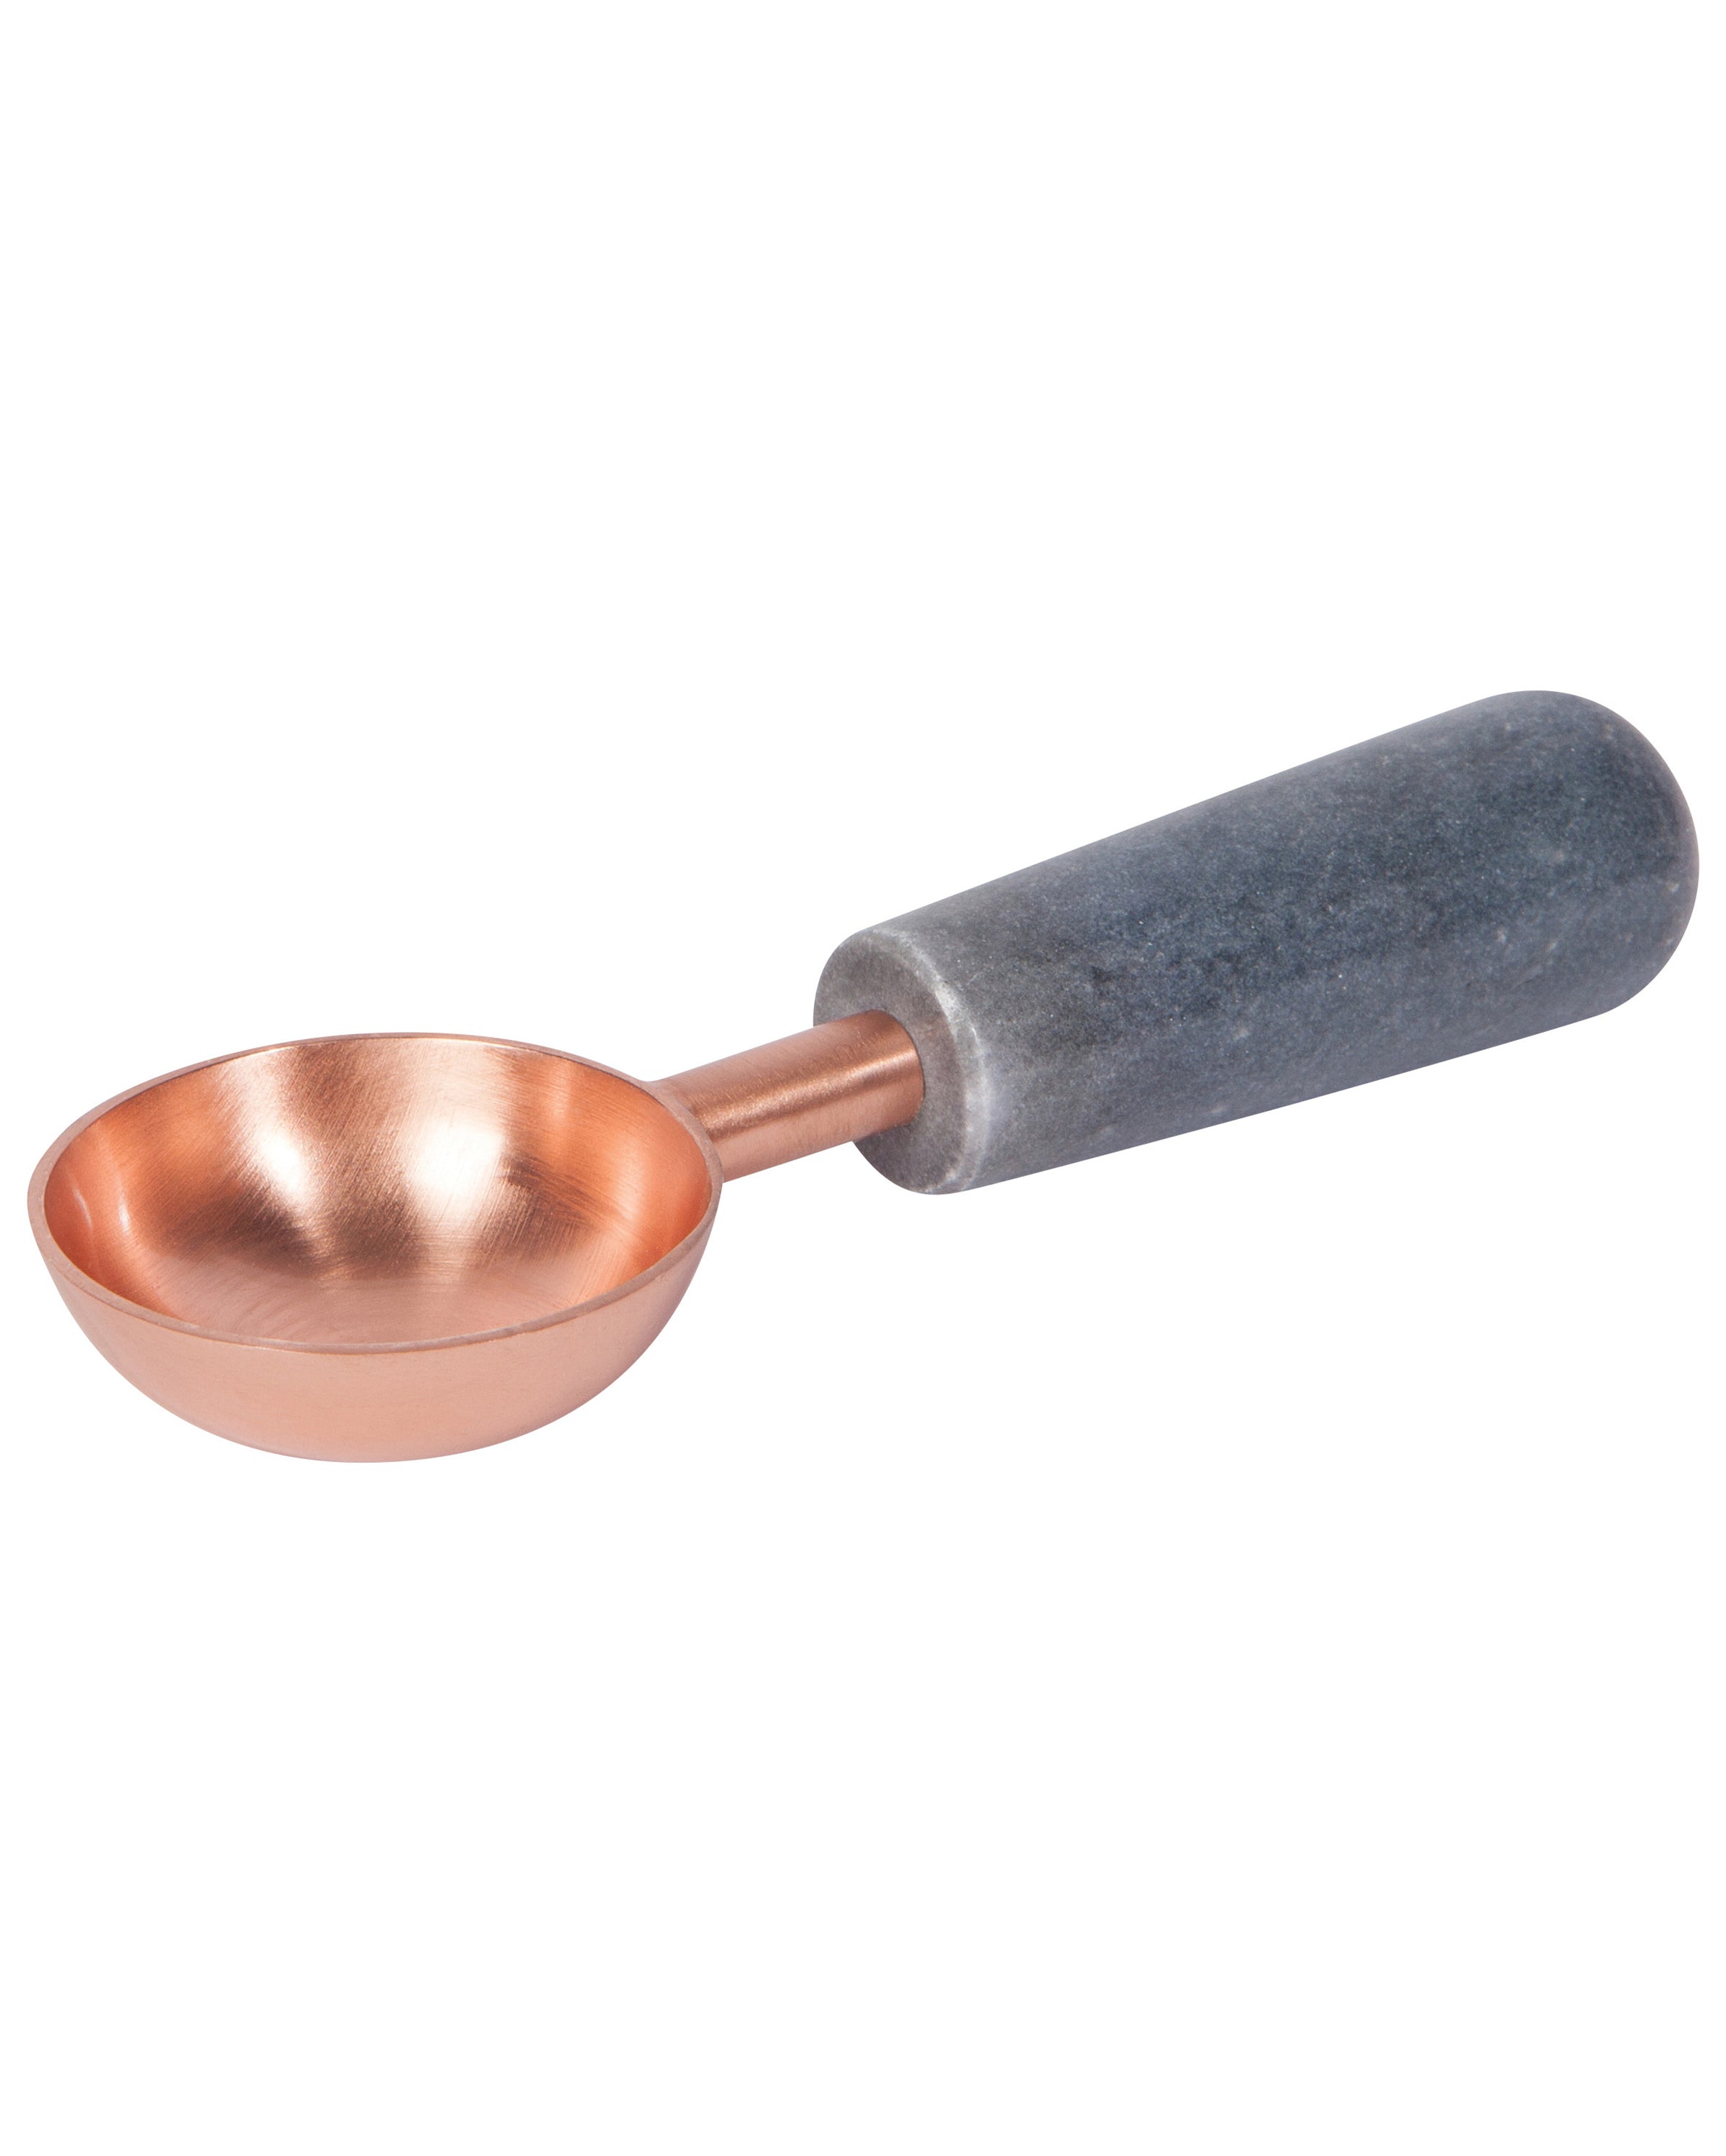 Danica Designs Measuring Spoons in Rose Gold/Slate Marble